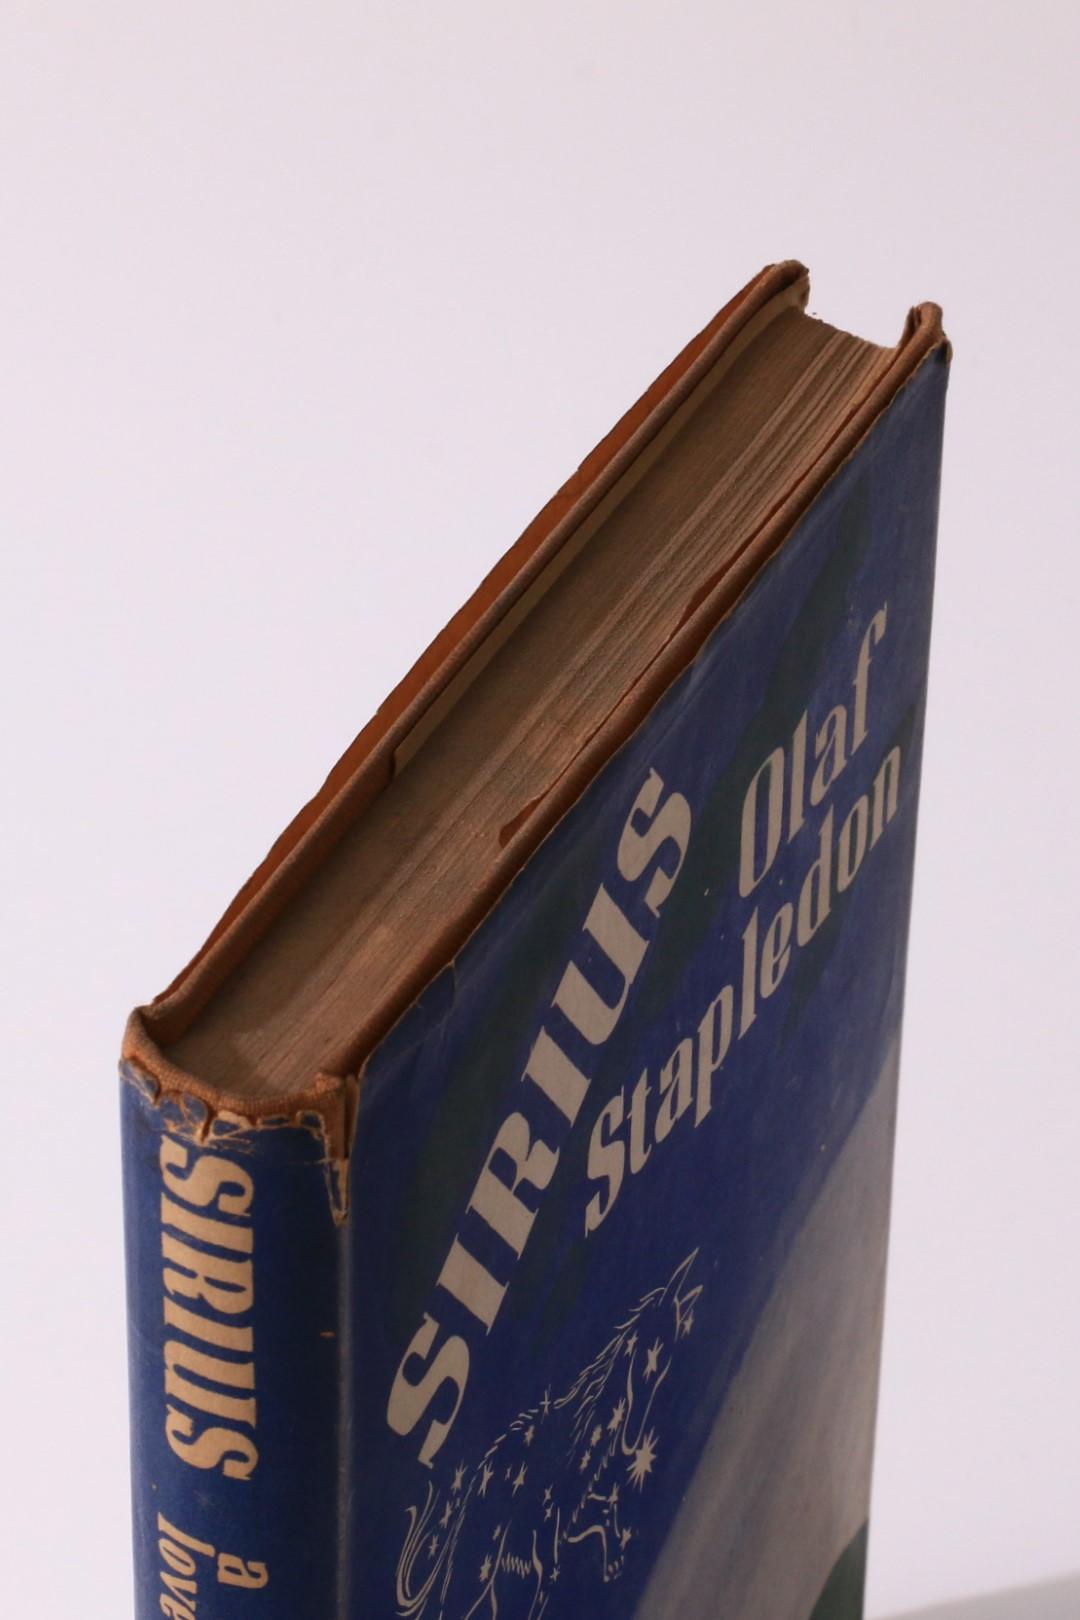 Olaf Stapledon - Sirius - Secker & Warburg, 1944, First Edition.